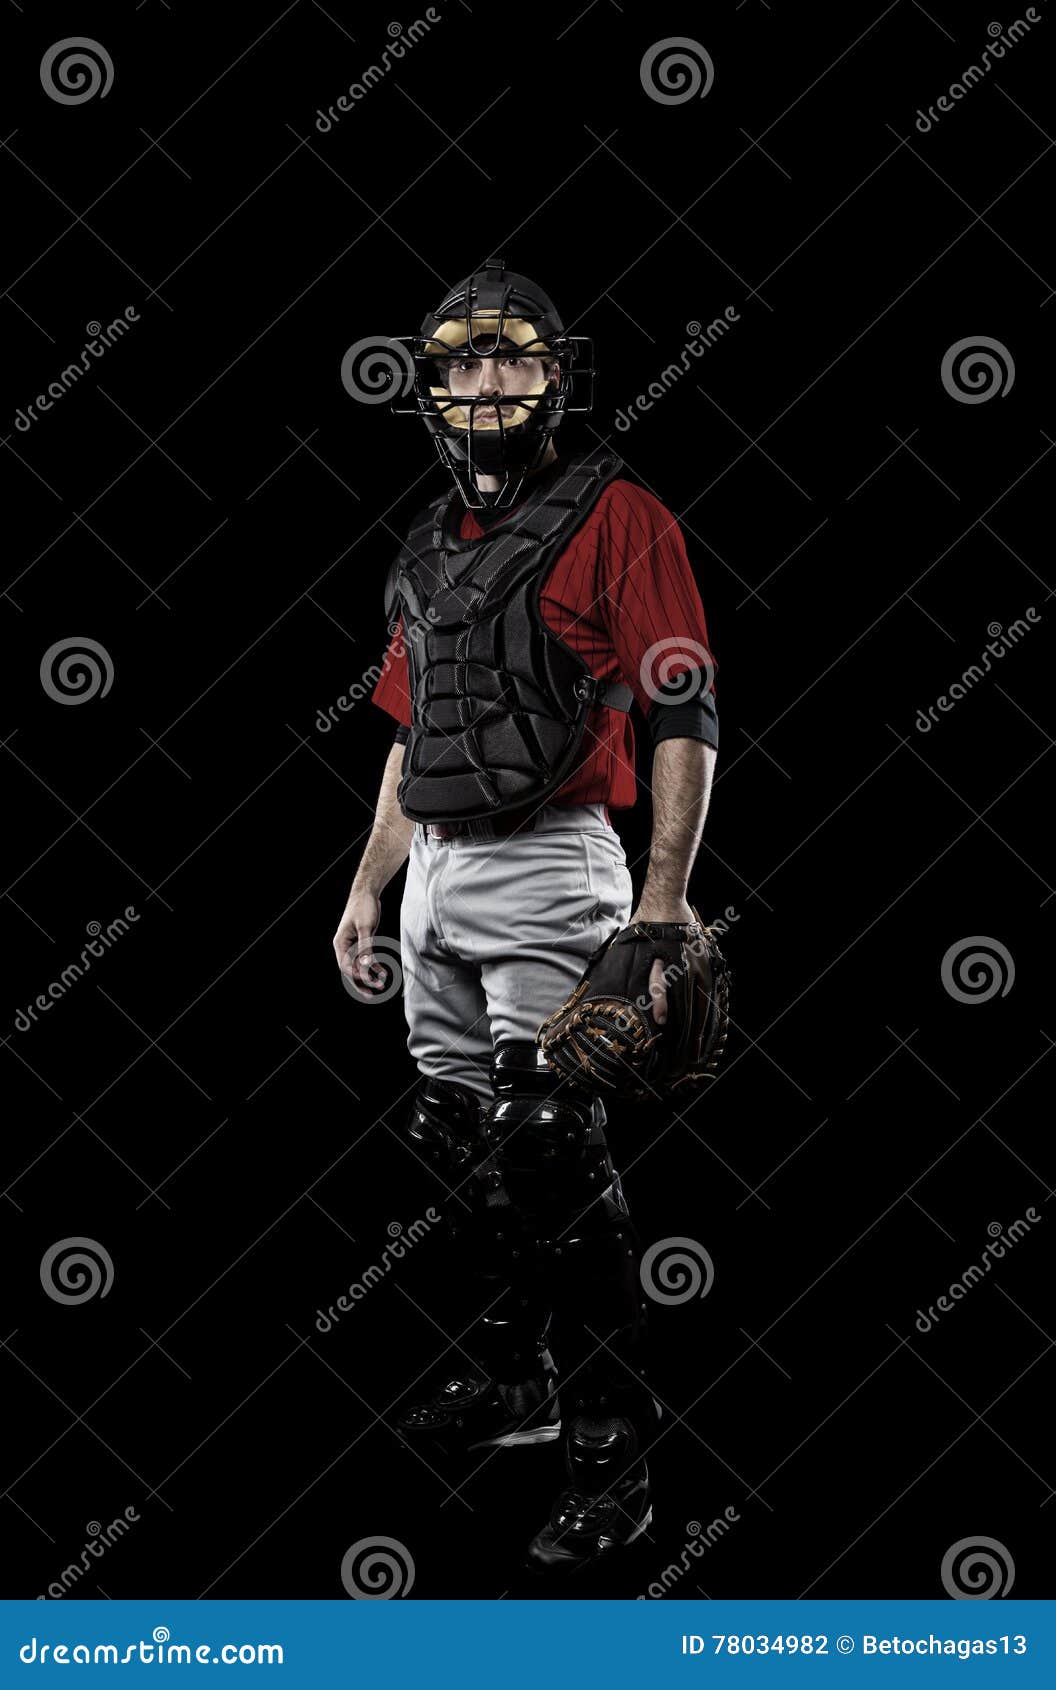 Catcher Baseball Player stock photo. Image of baseball - 78034982